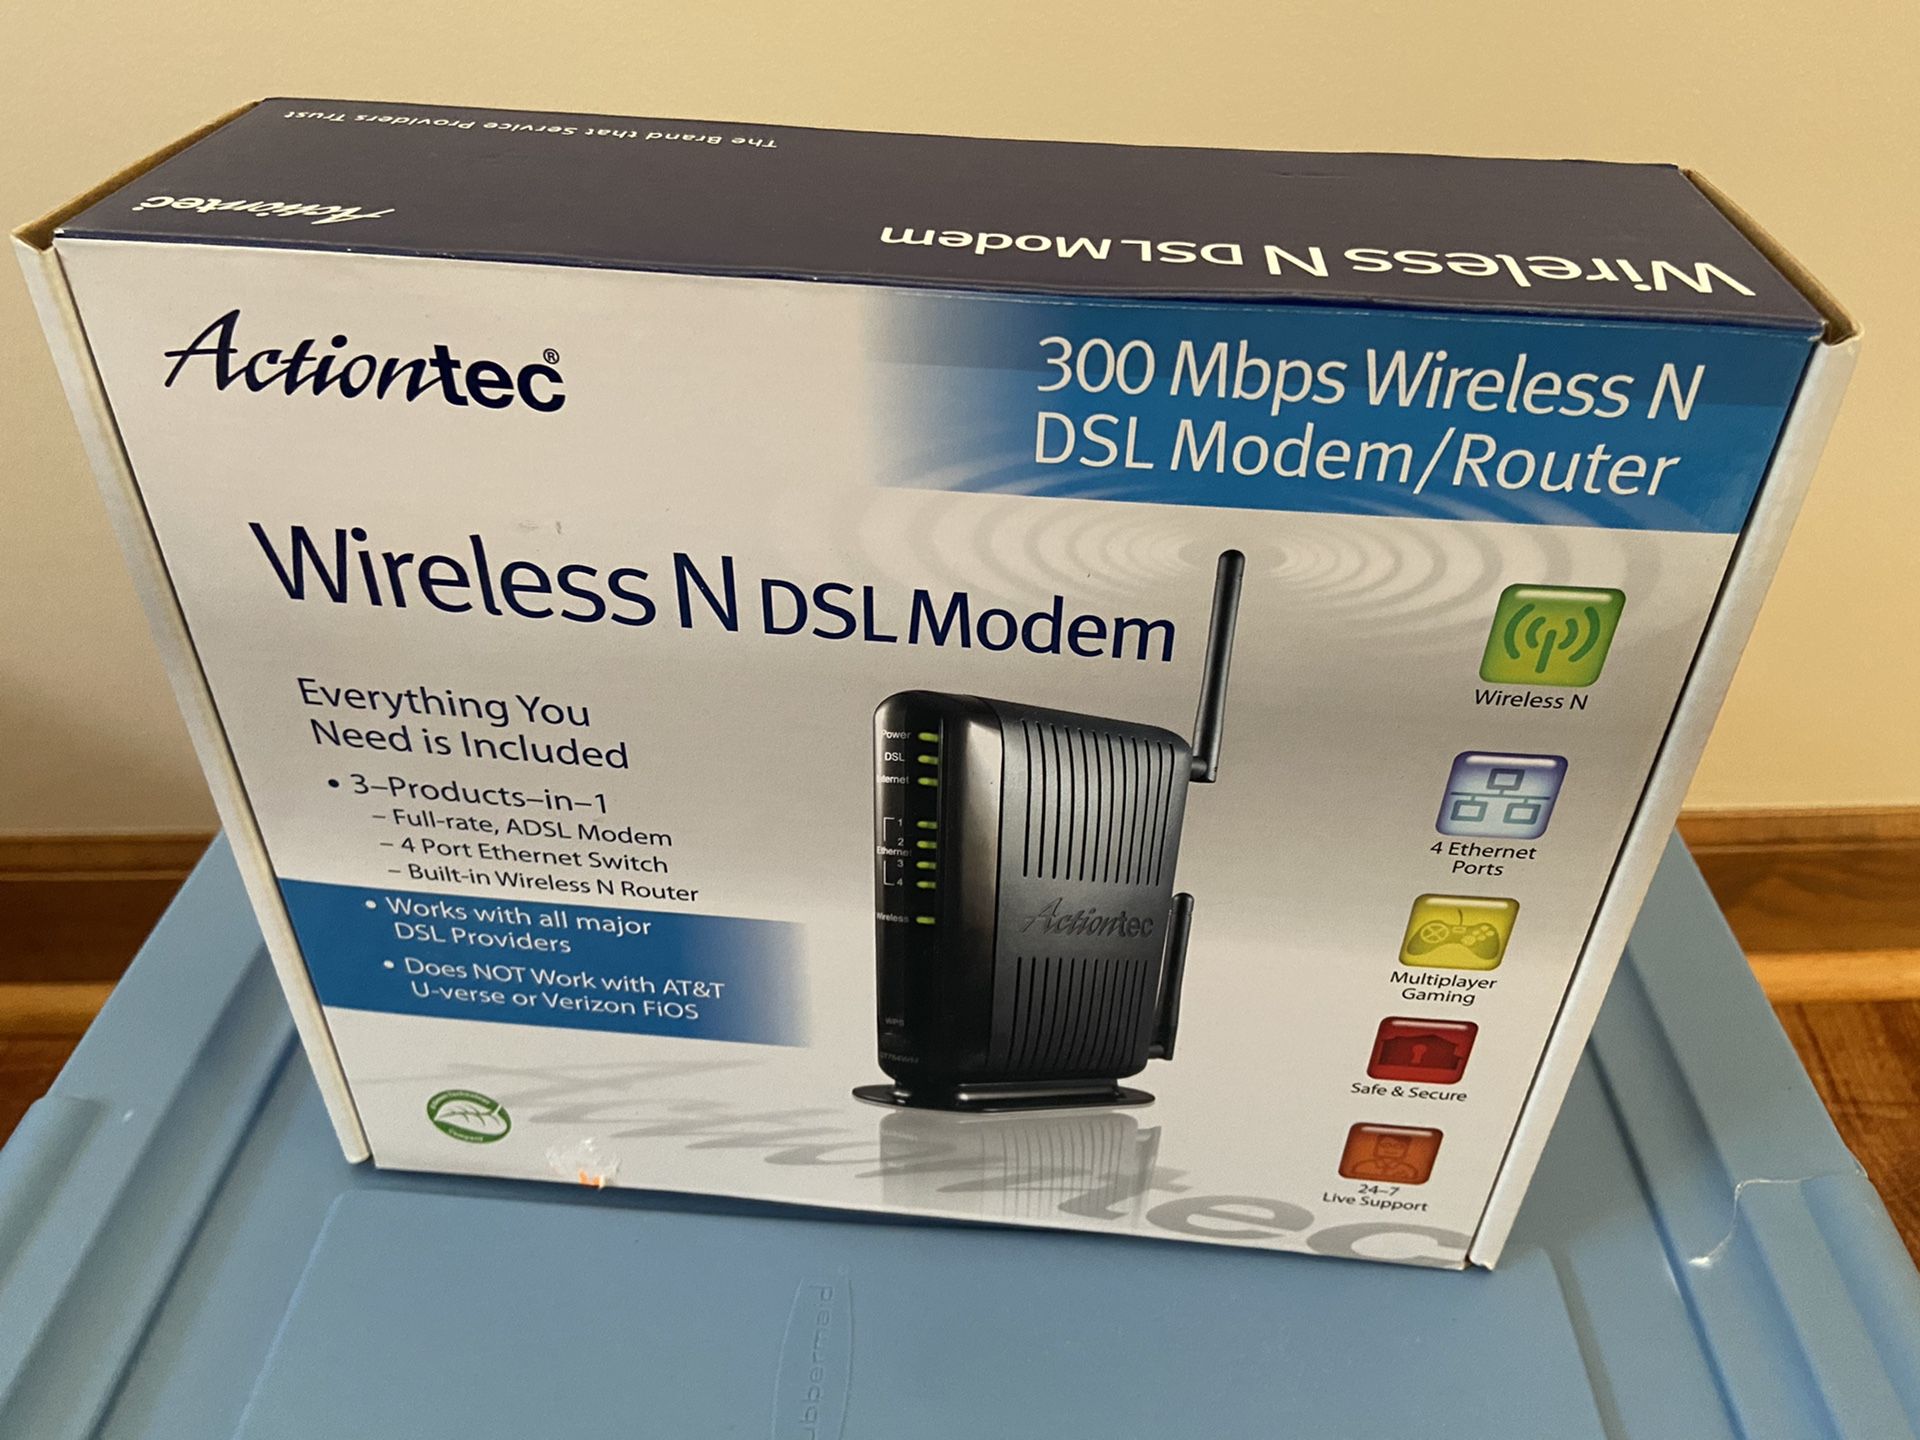 Wireless DSL modem/Router